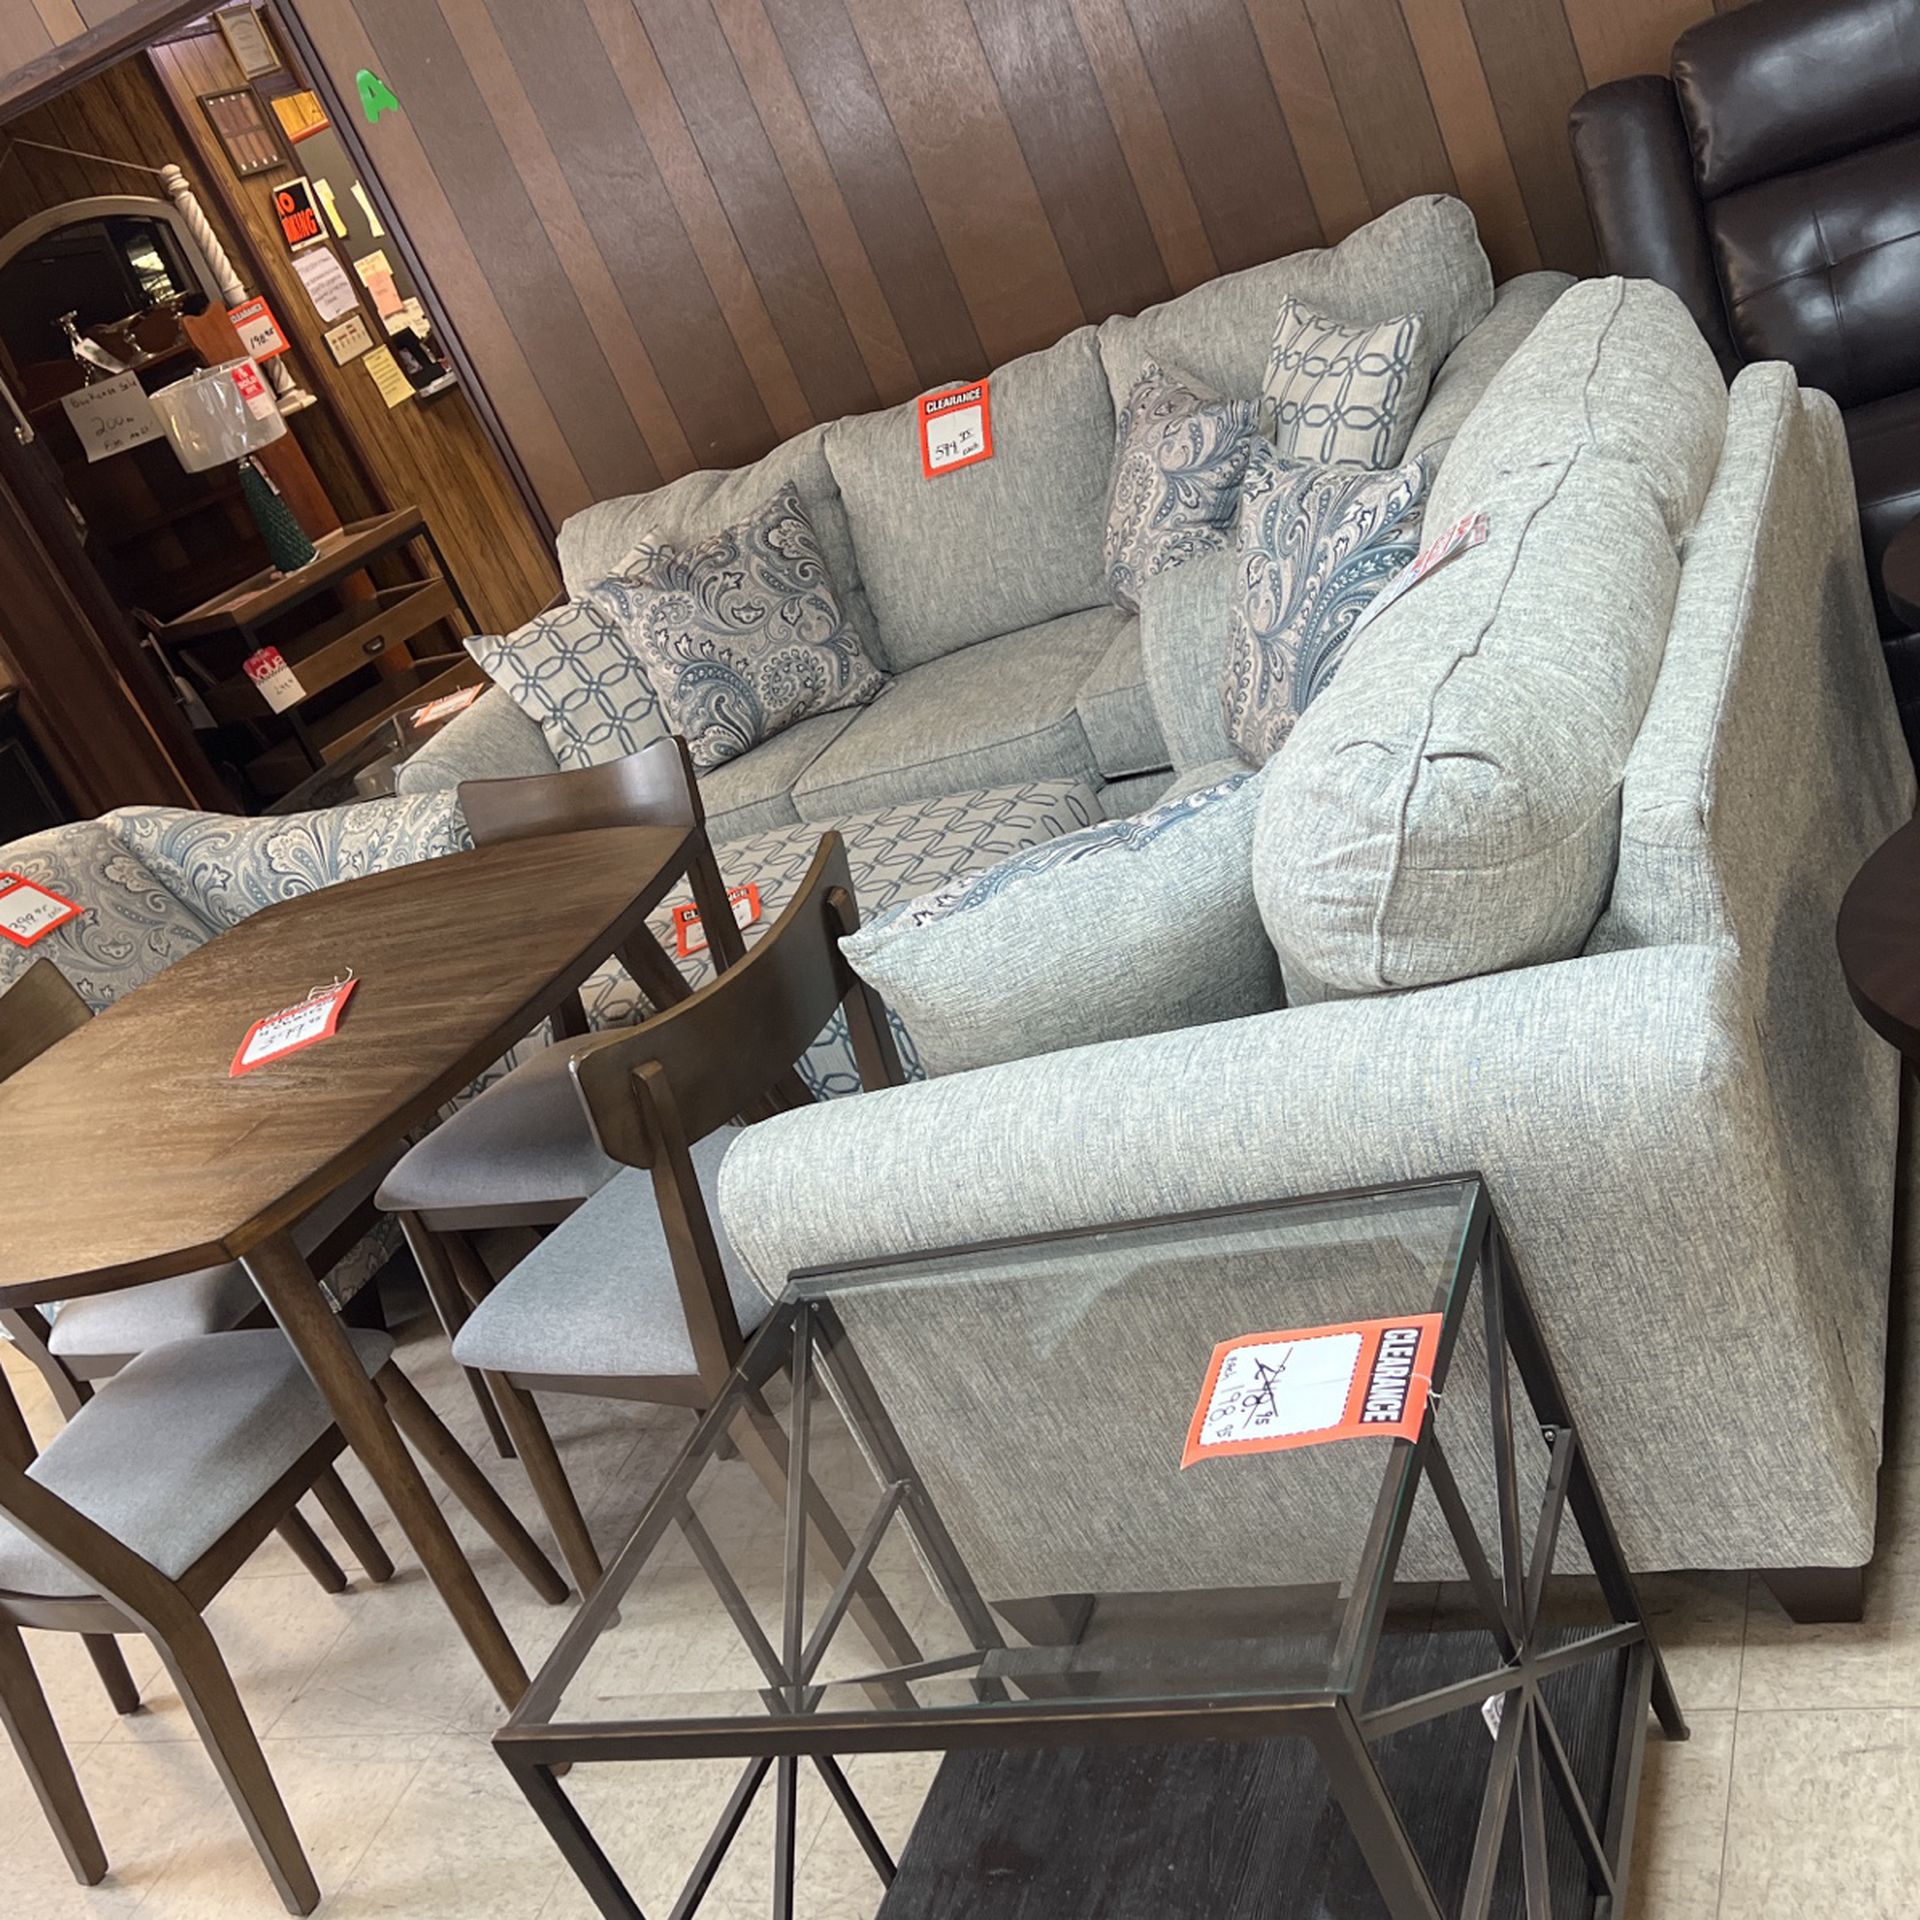 Brand new sofa $600